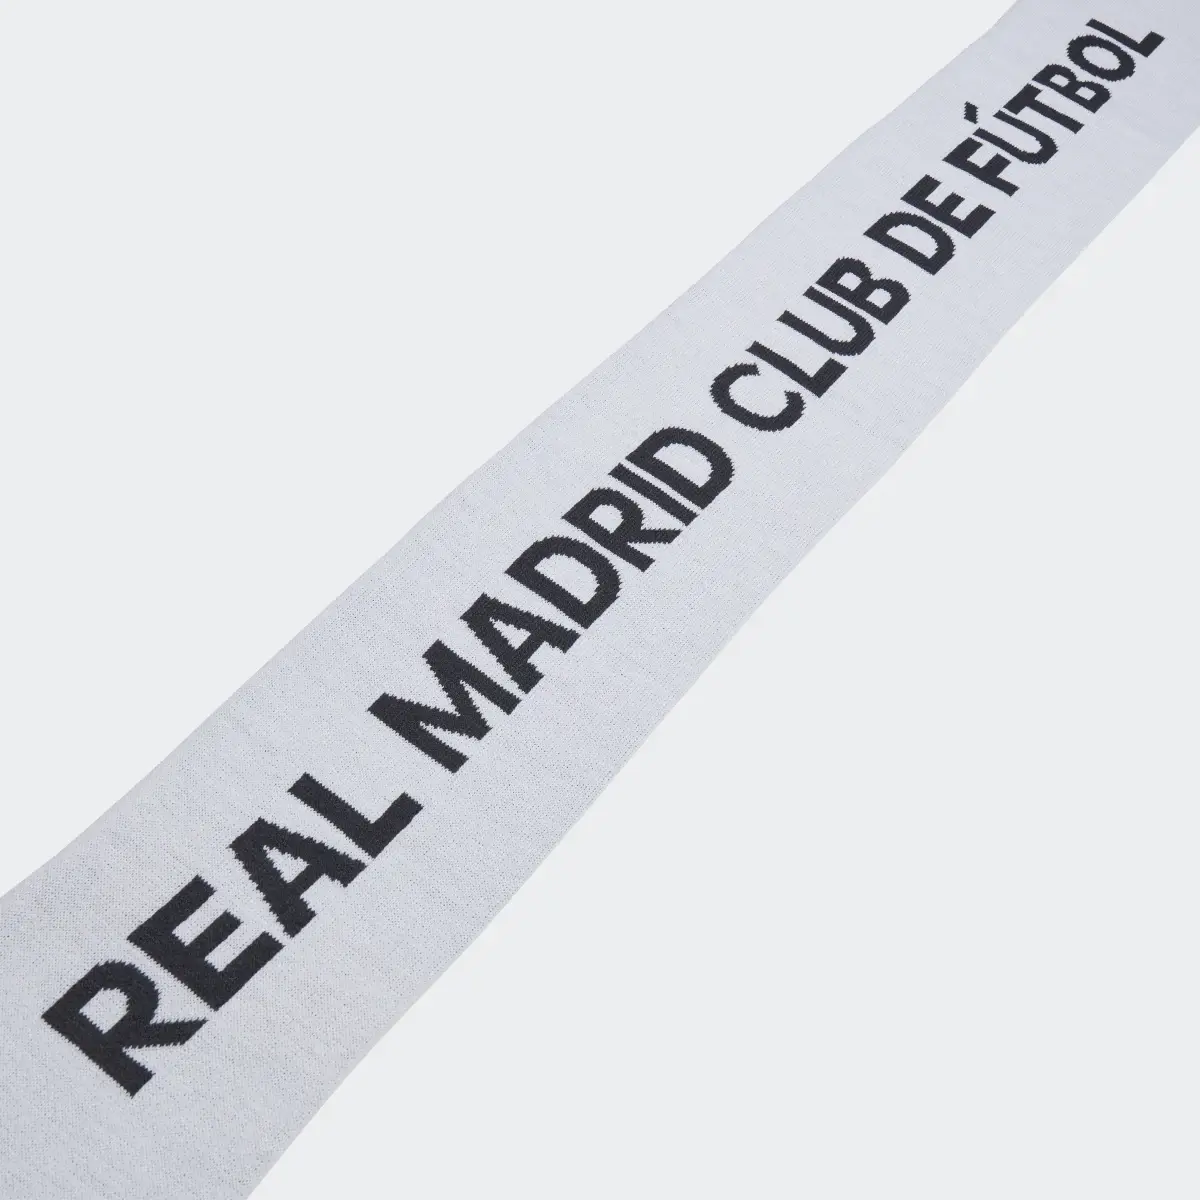 Adidas Cachecol do Real Madrid. 3